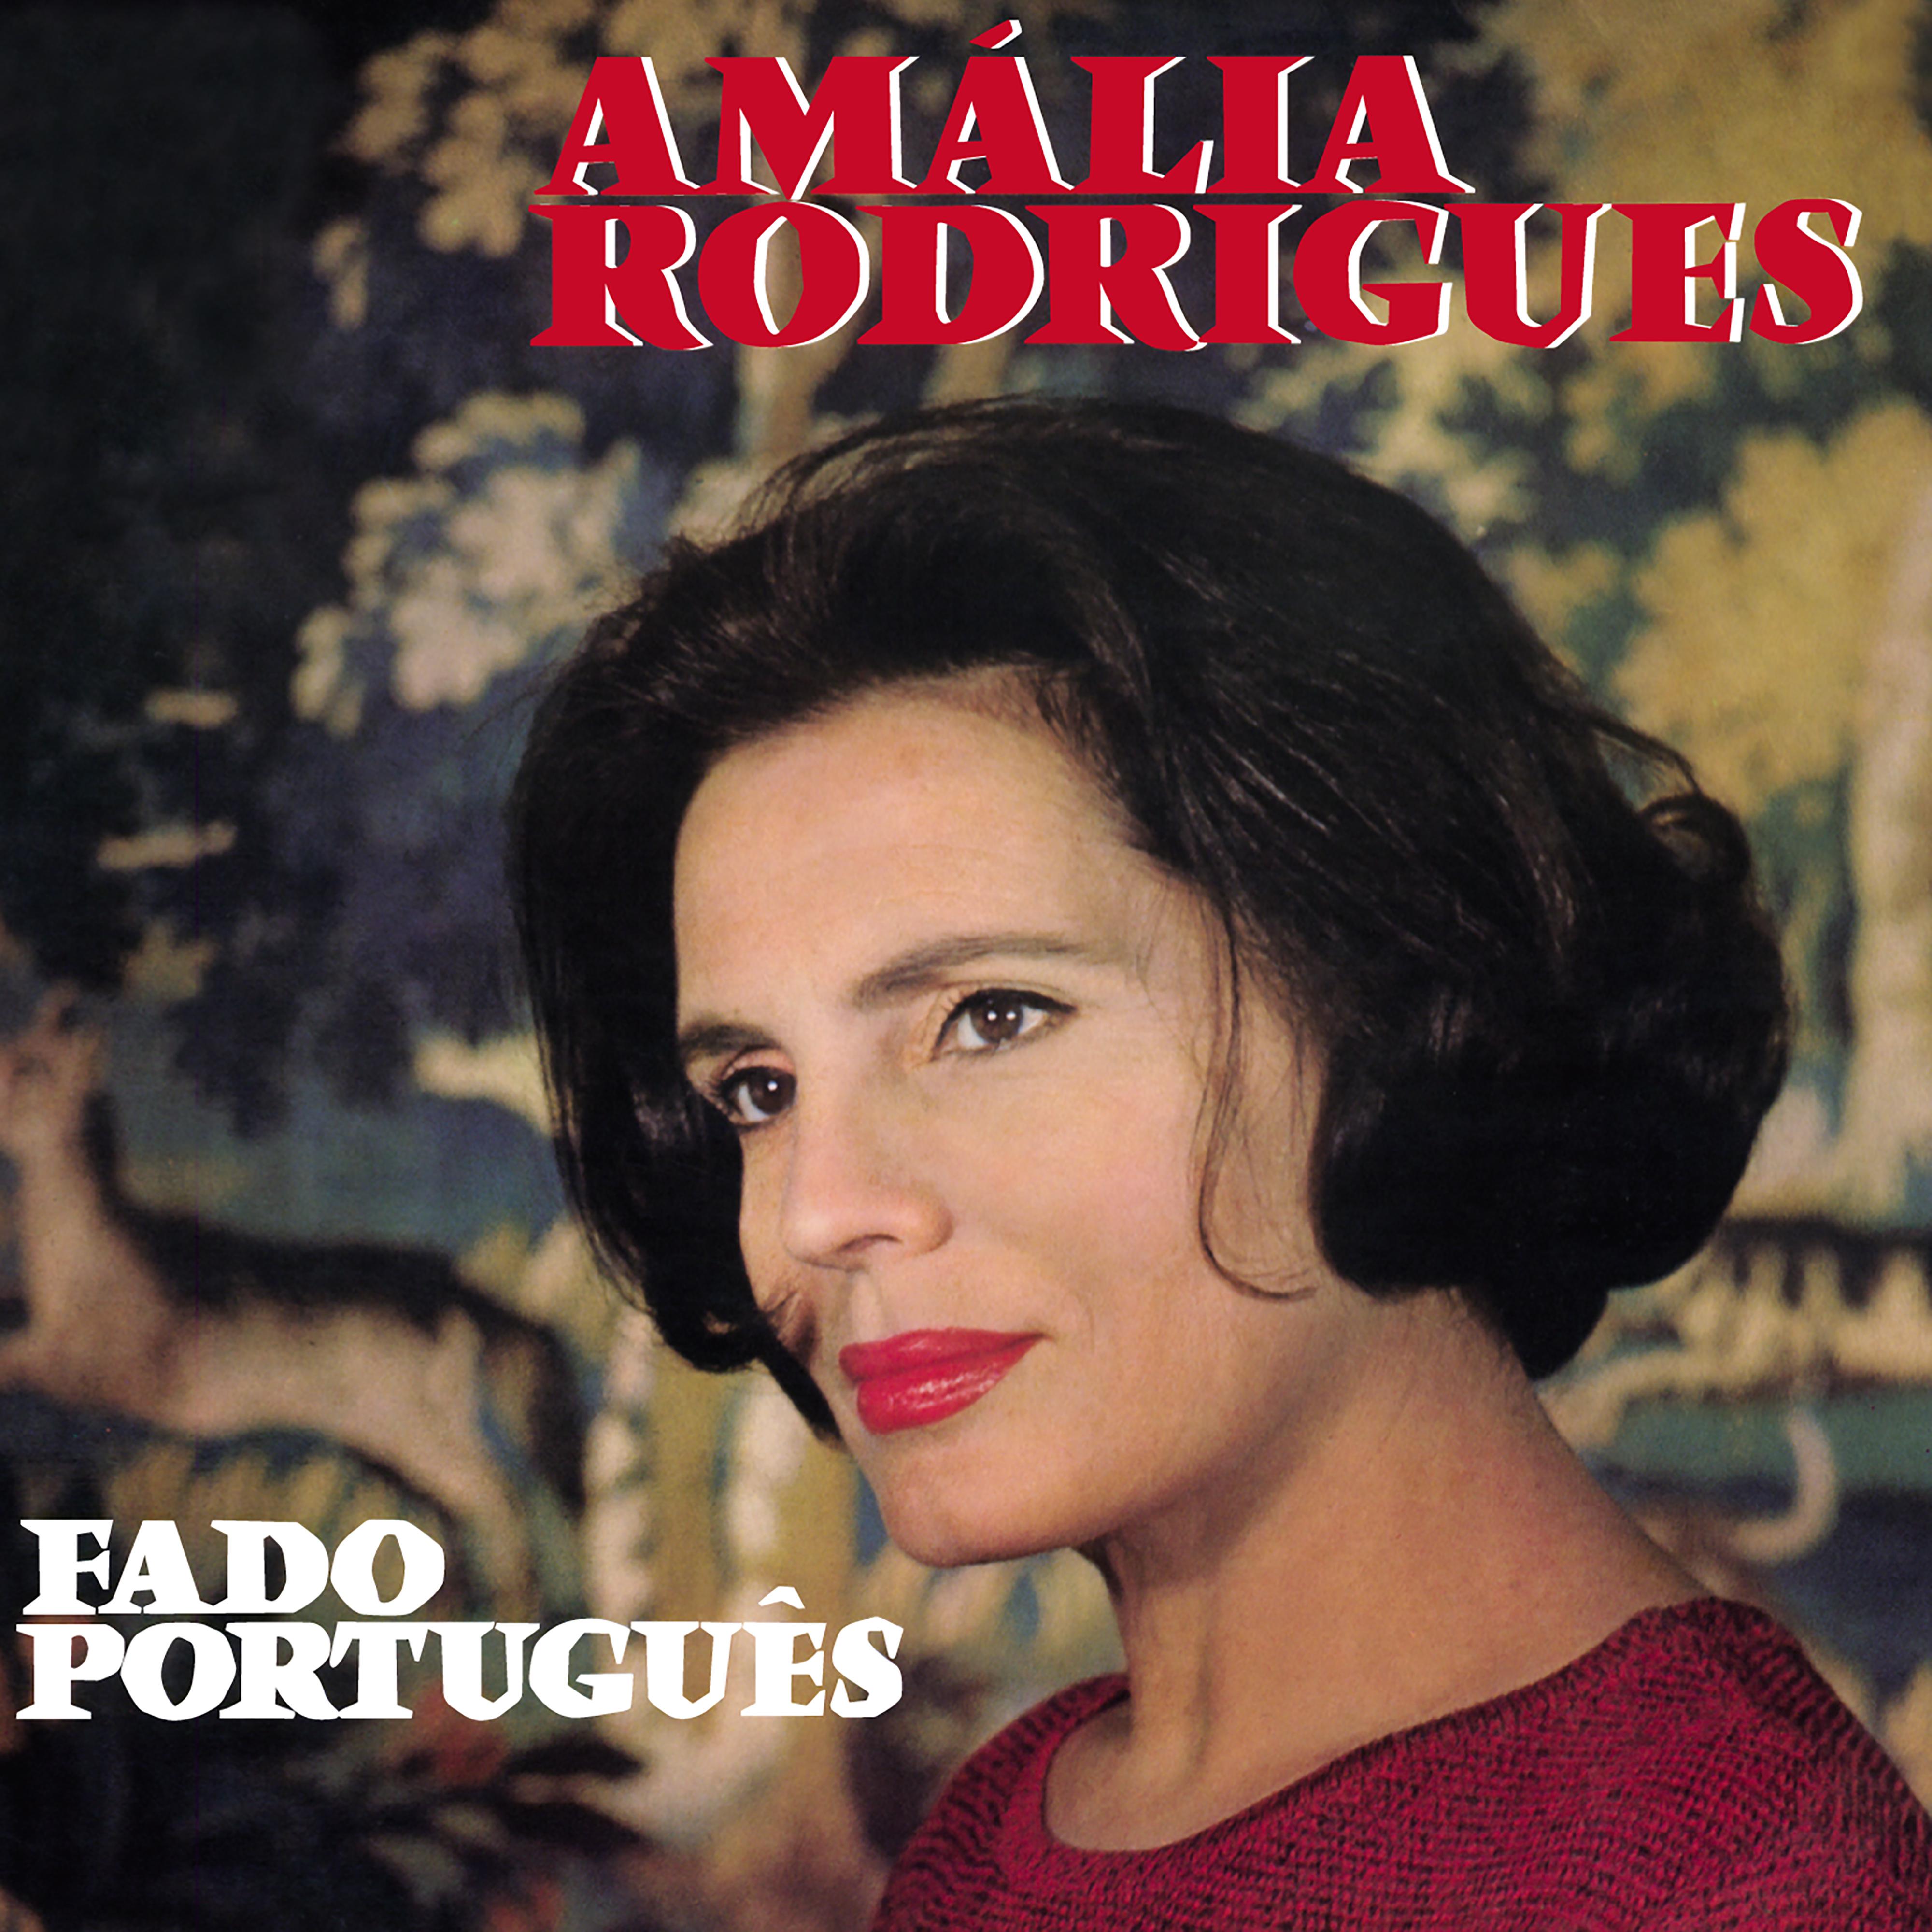 Fado Português专辑